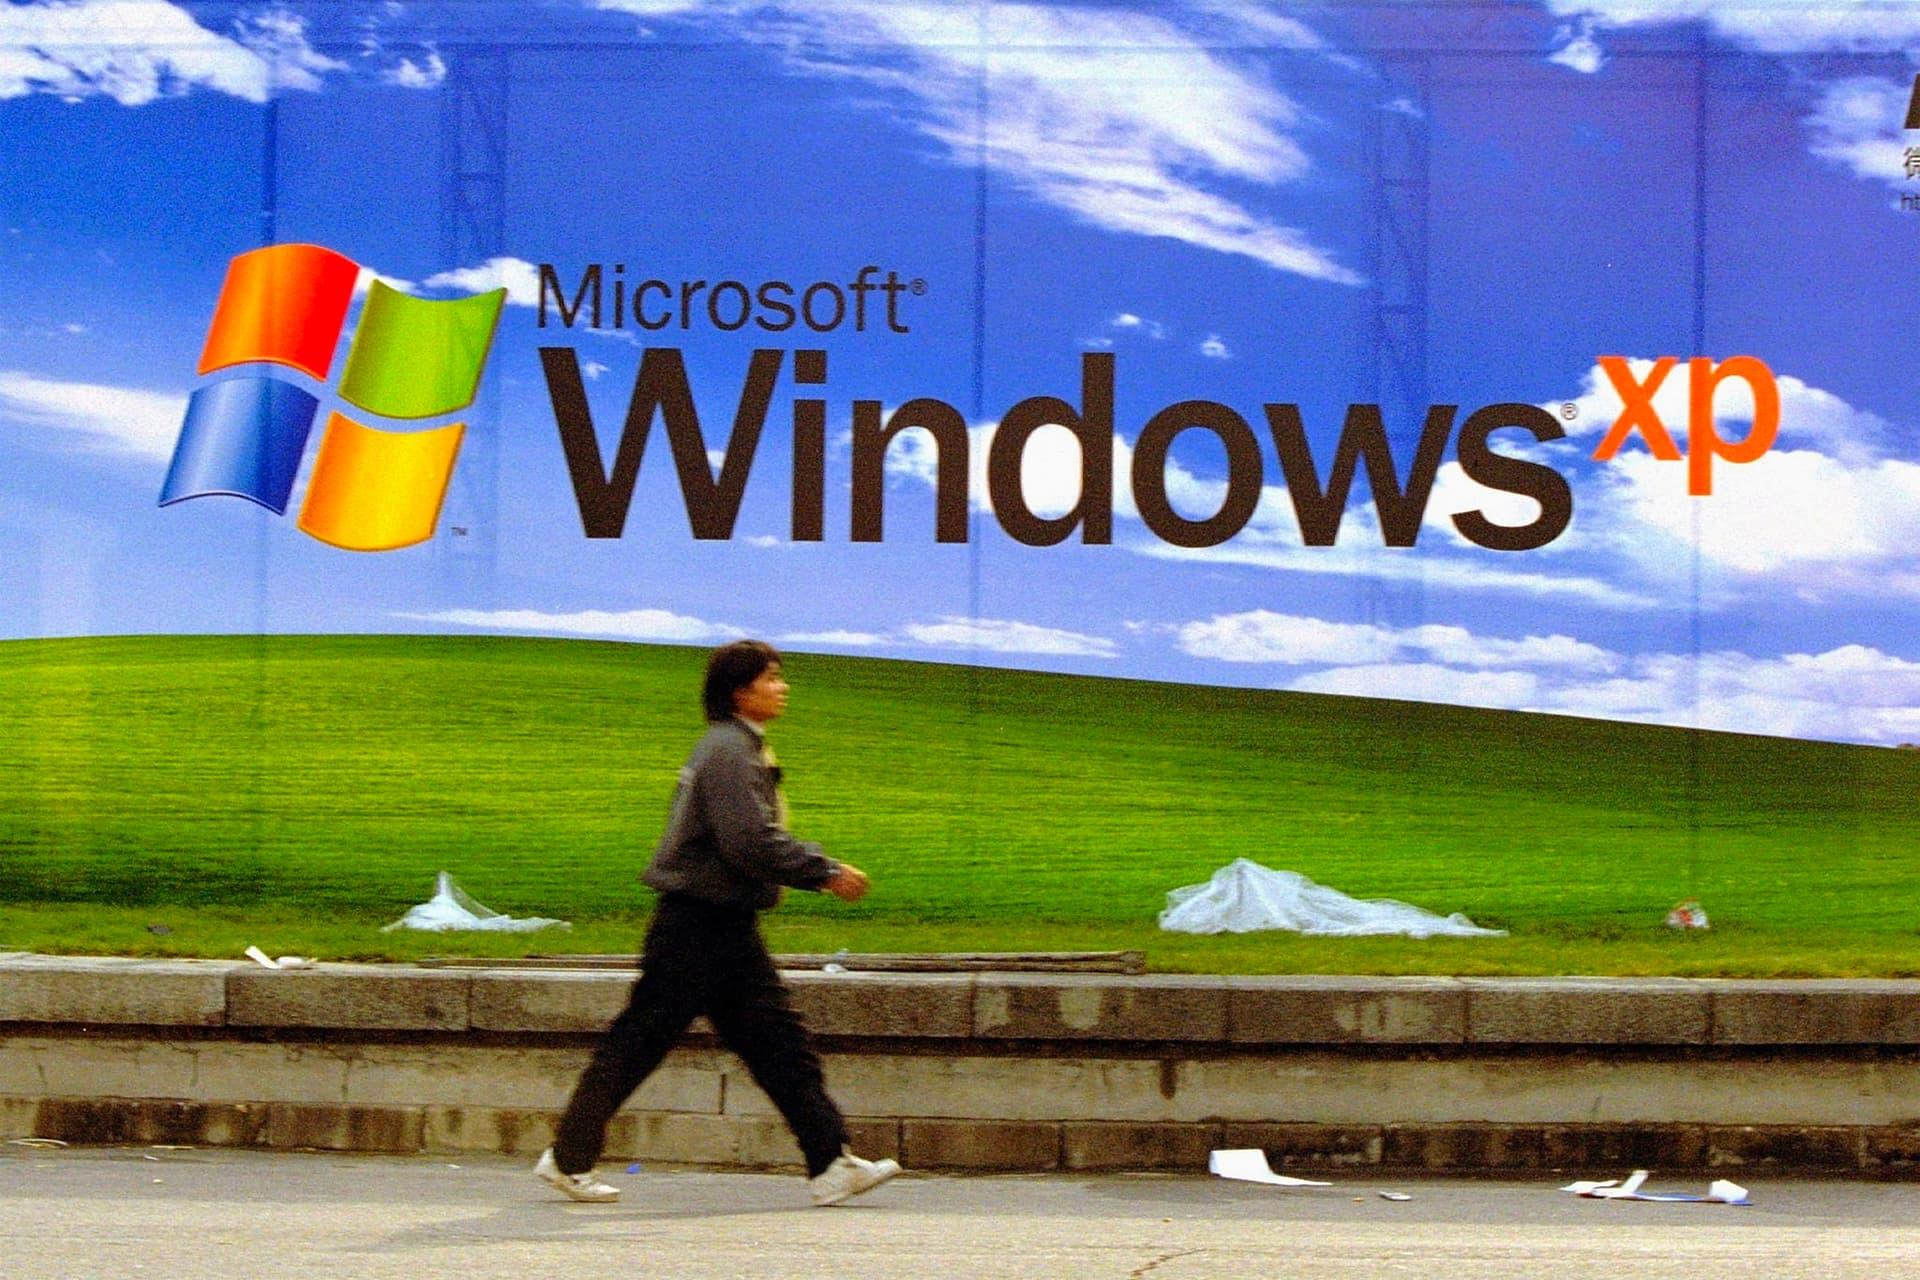 لوگو ویندوز اکس پی / Windows XP روی بیلبورد قدیمی